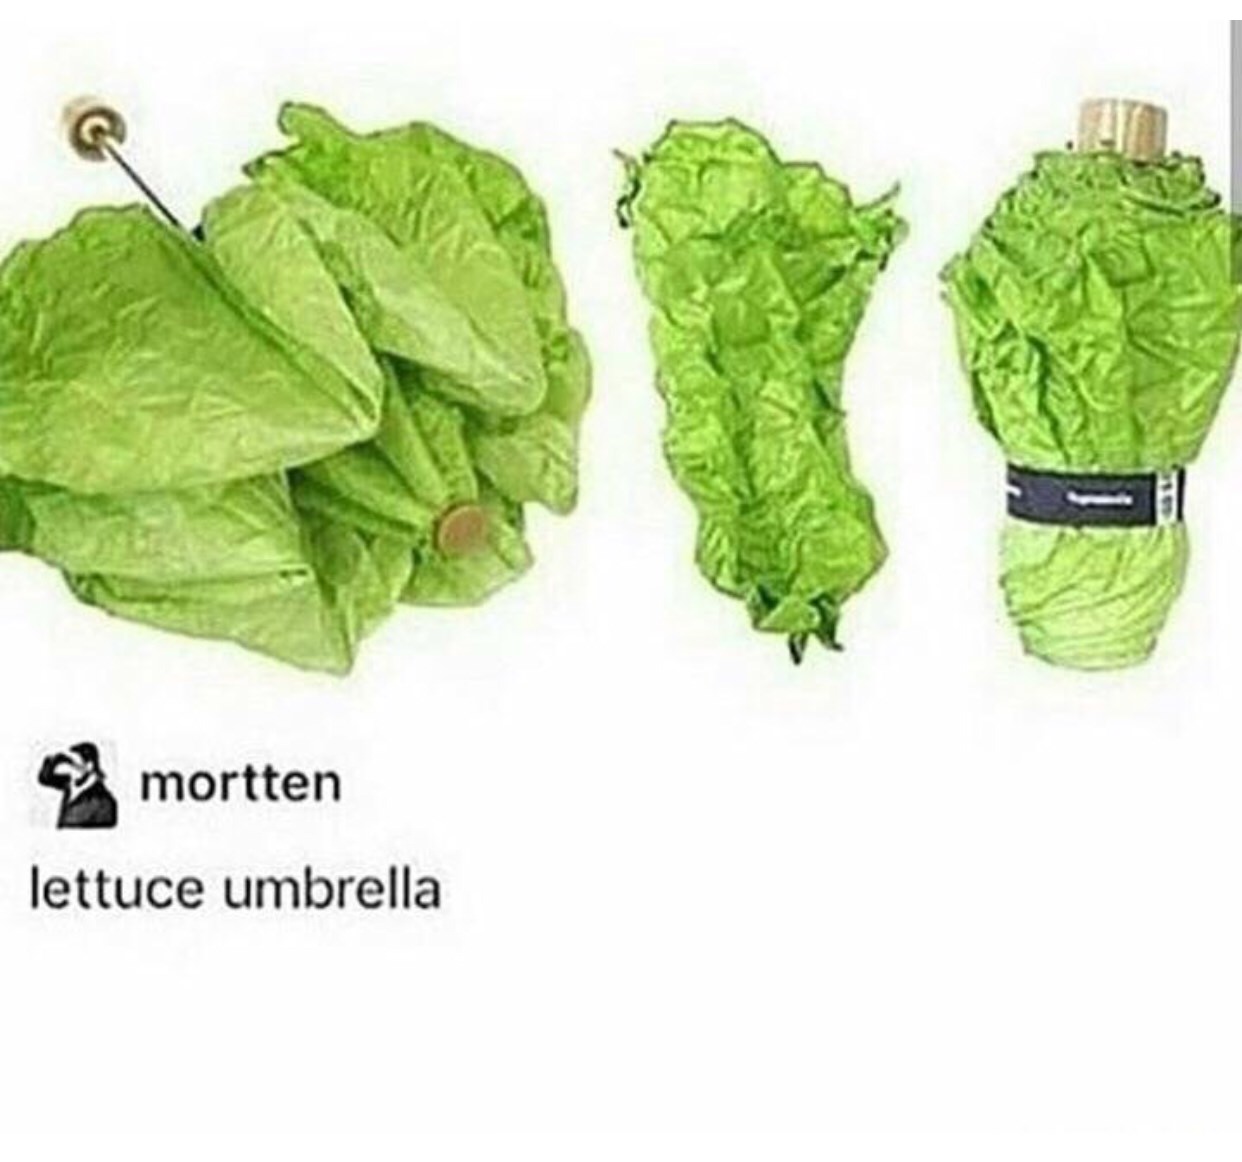 memes - lettuce umbrella - mortten lettuce umbrella